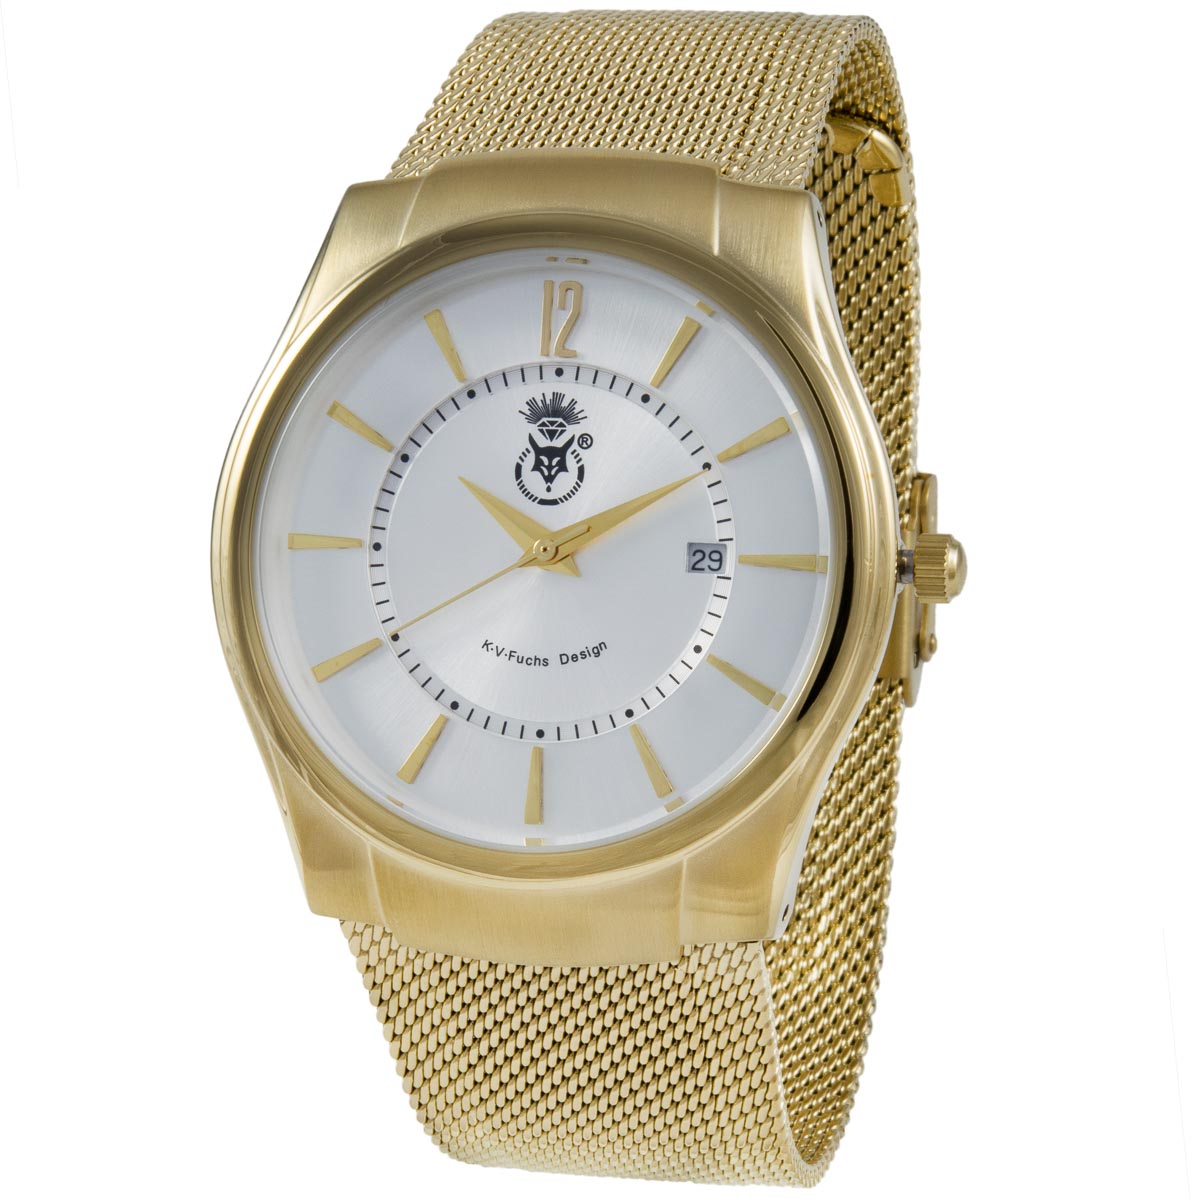 K.V. Fuchs Design Herren Quarzuhr analog Armbanduhr in gold, silber mit Edelstahl Milanaise-Armband in gold »U-79-07-Gold«